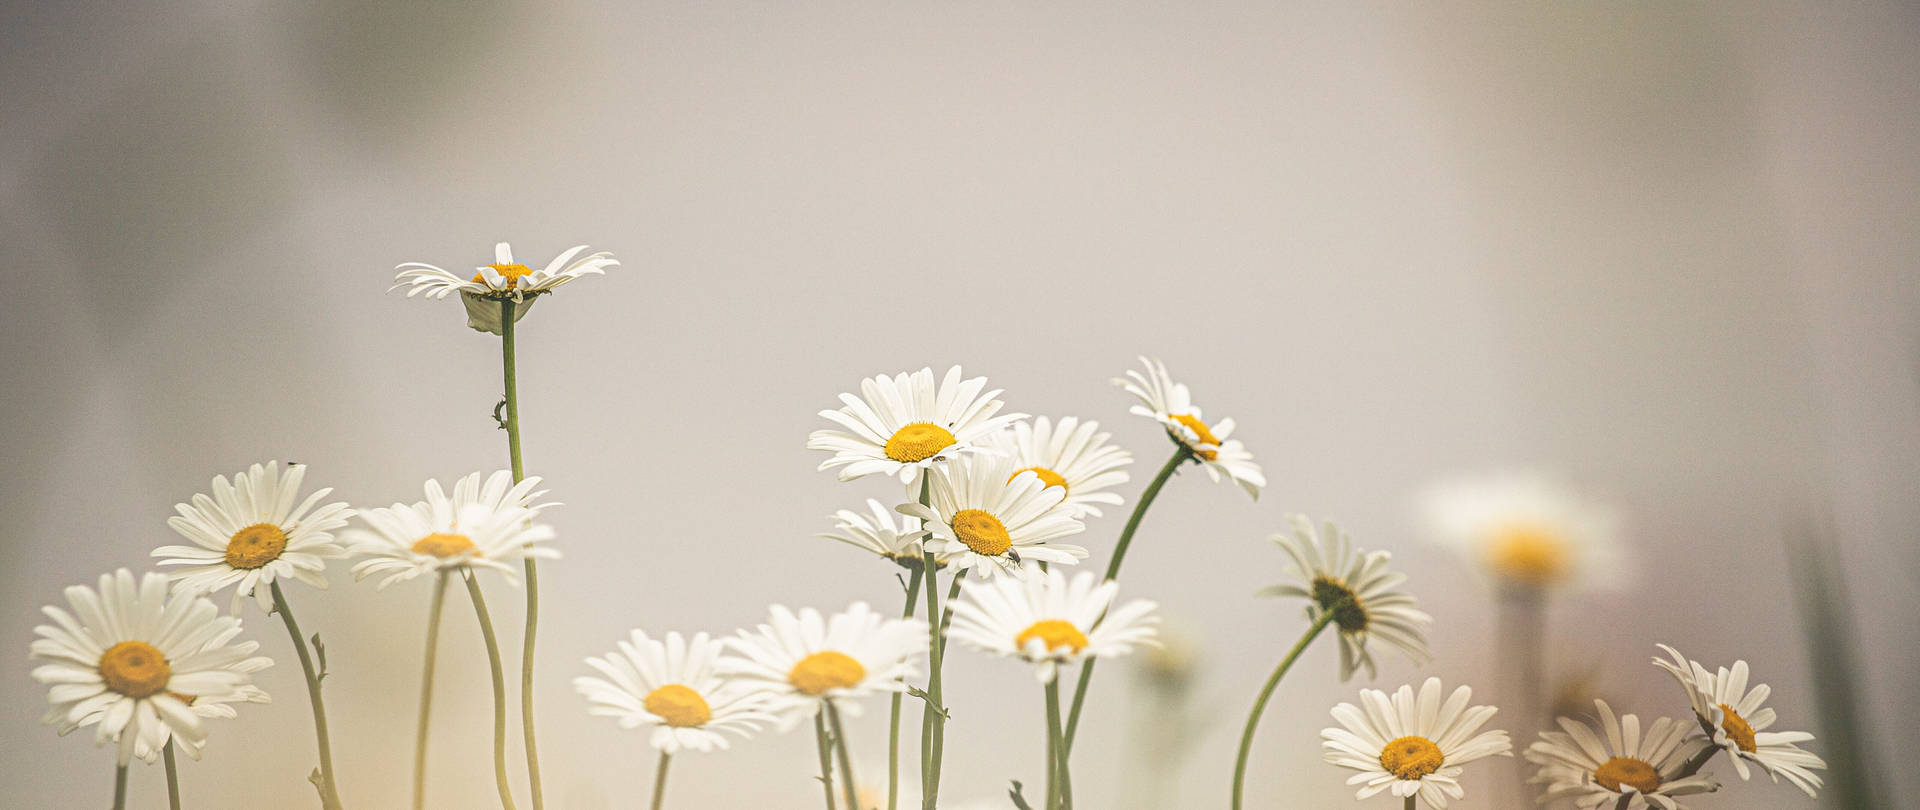 Daisy Flowers In Faint Filter 4k